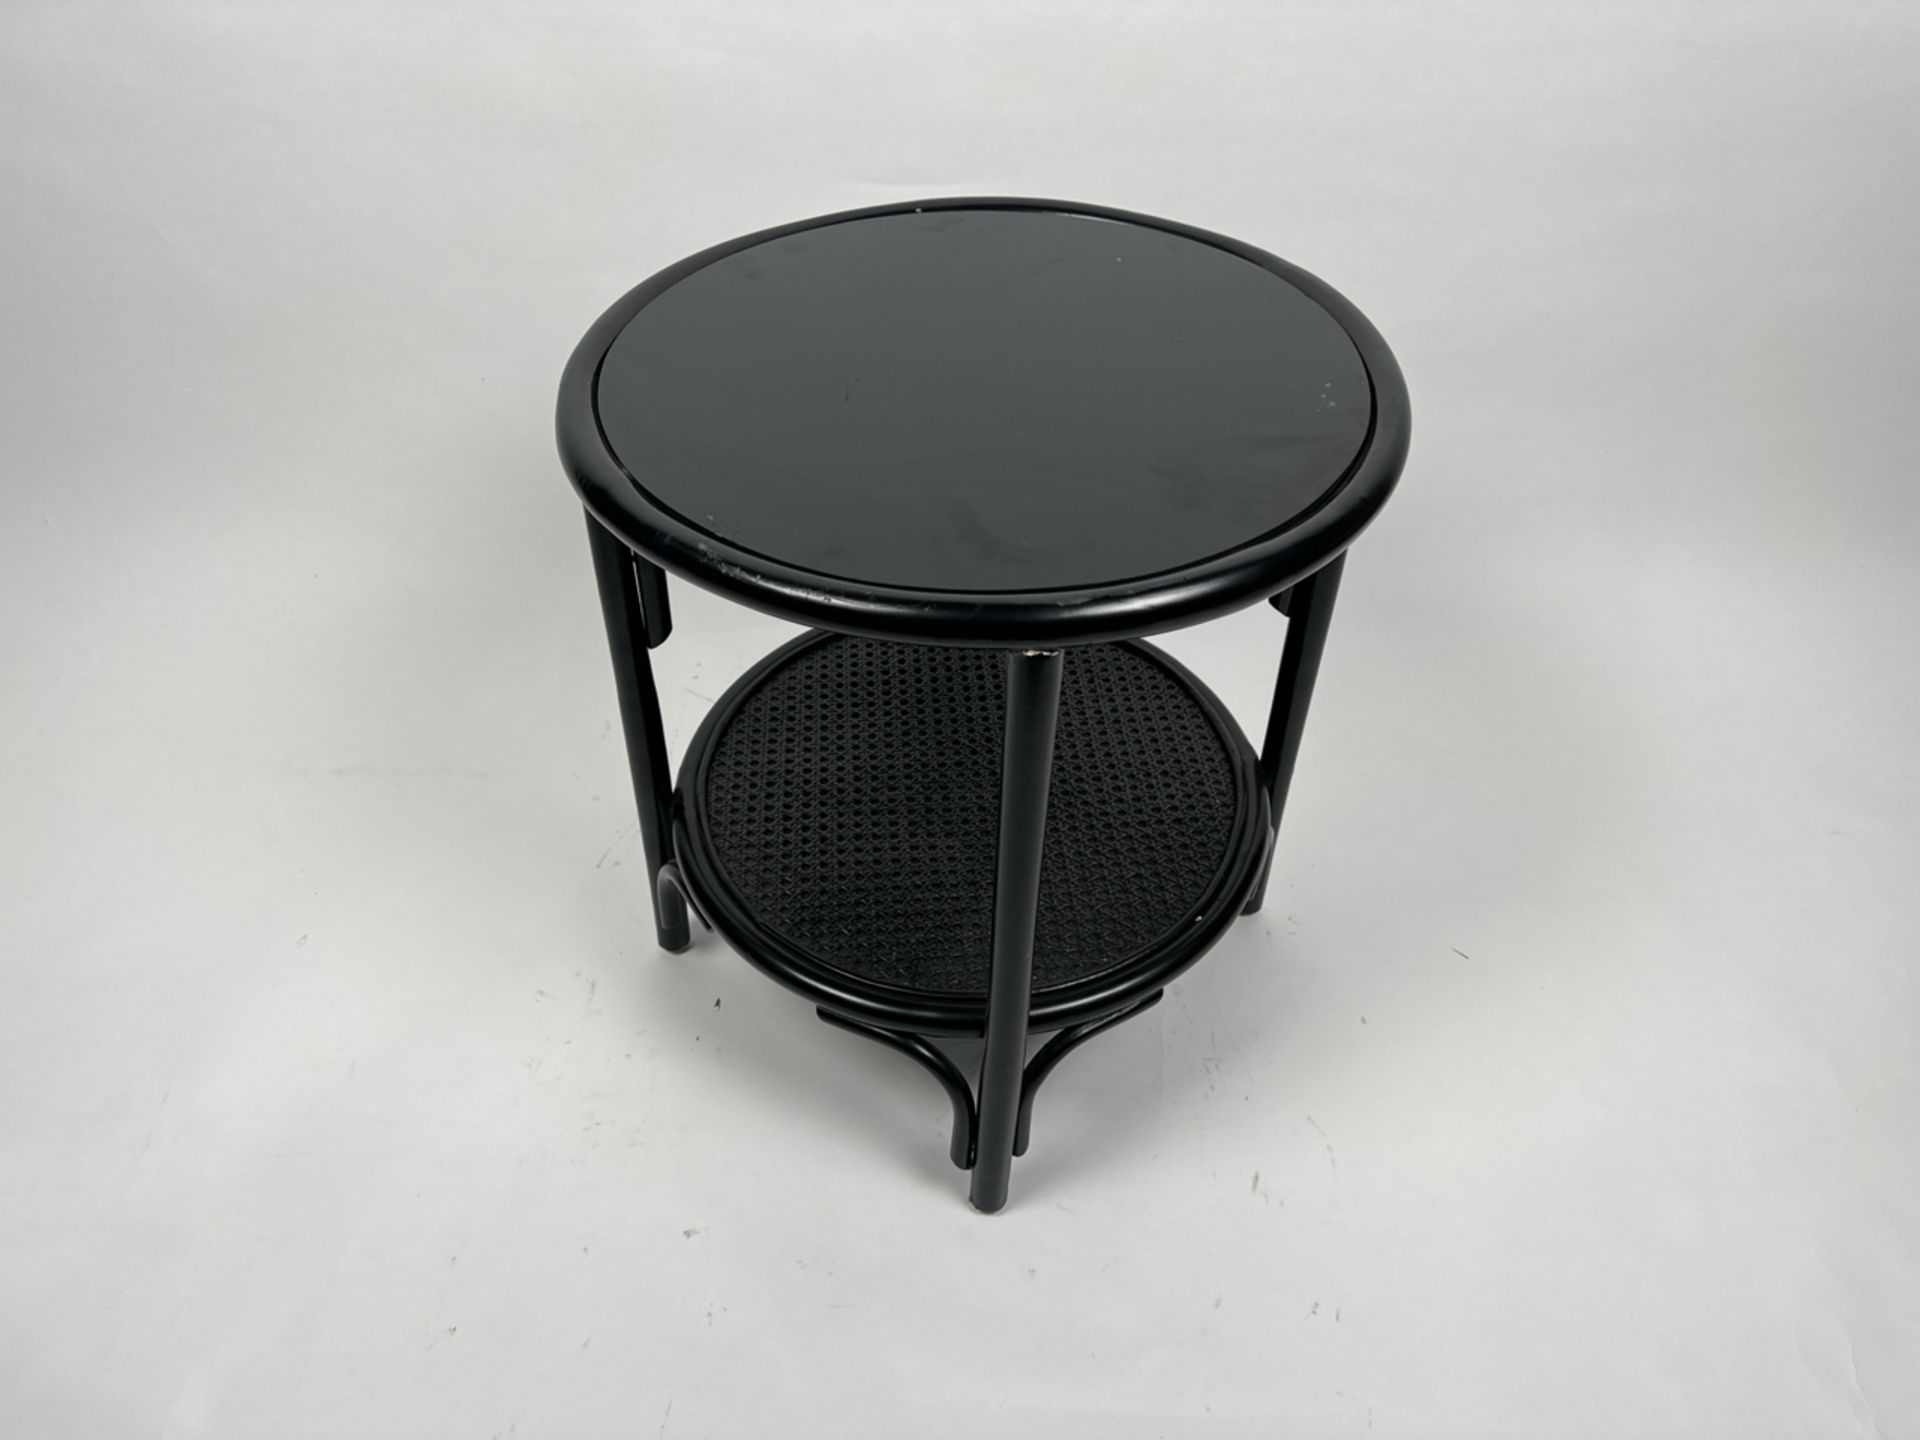 Nordal Kasai Coffee Table Black Wicker - Image 2 of 3